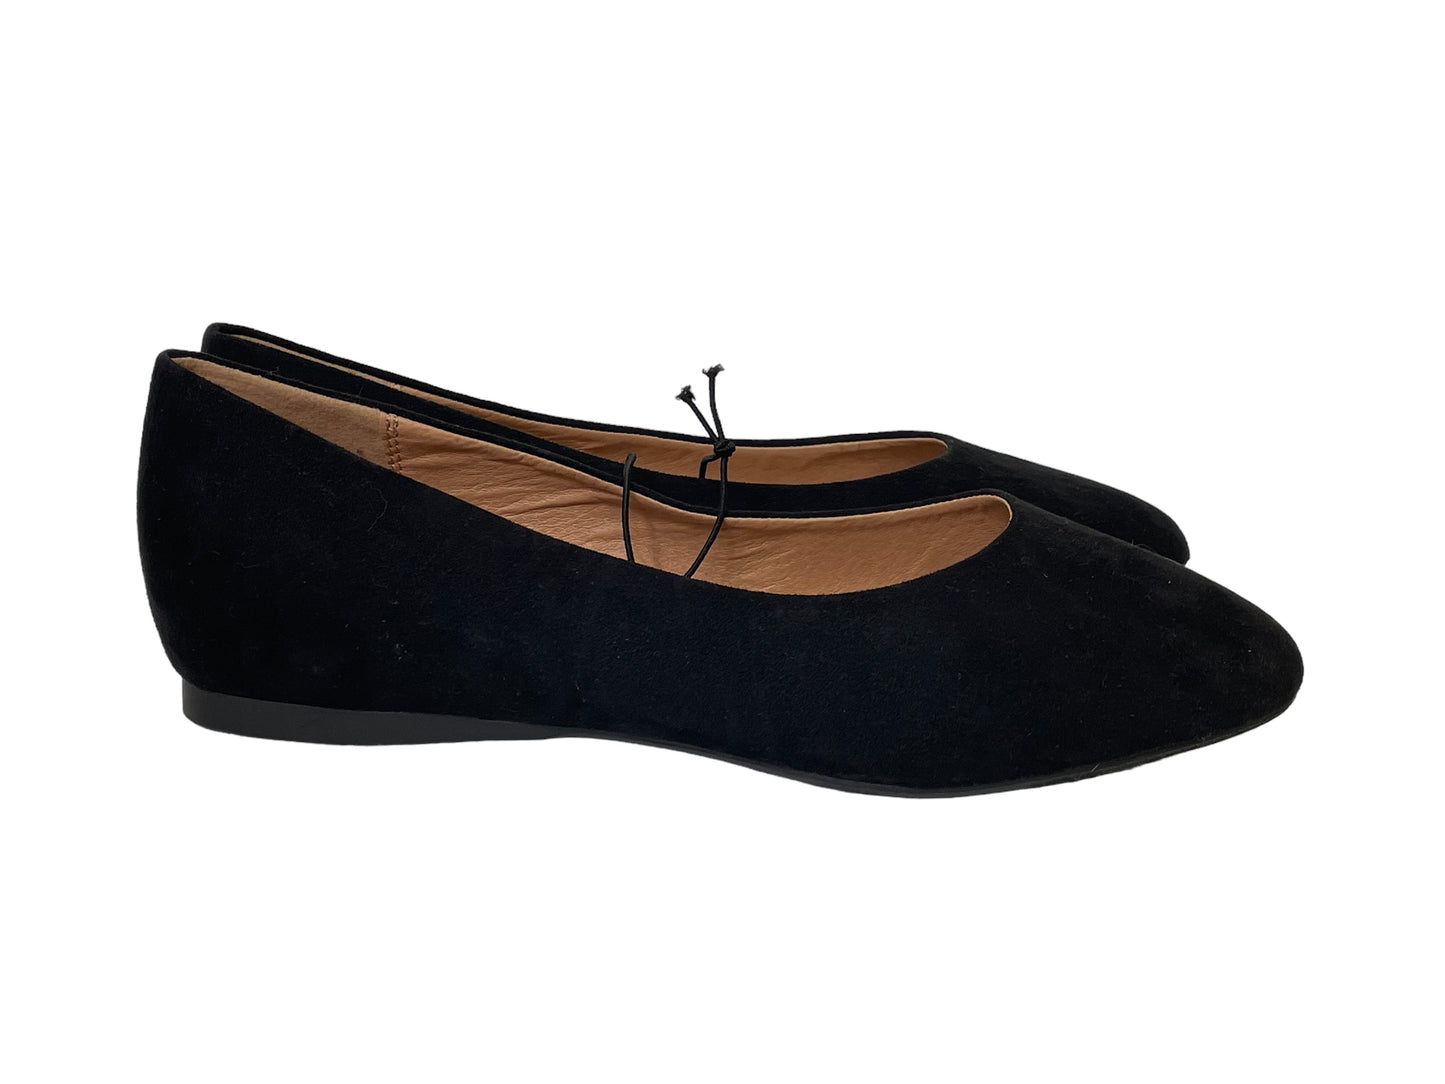 Black Shoes Flats By Lane Bryant, Size: 9